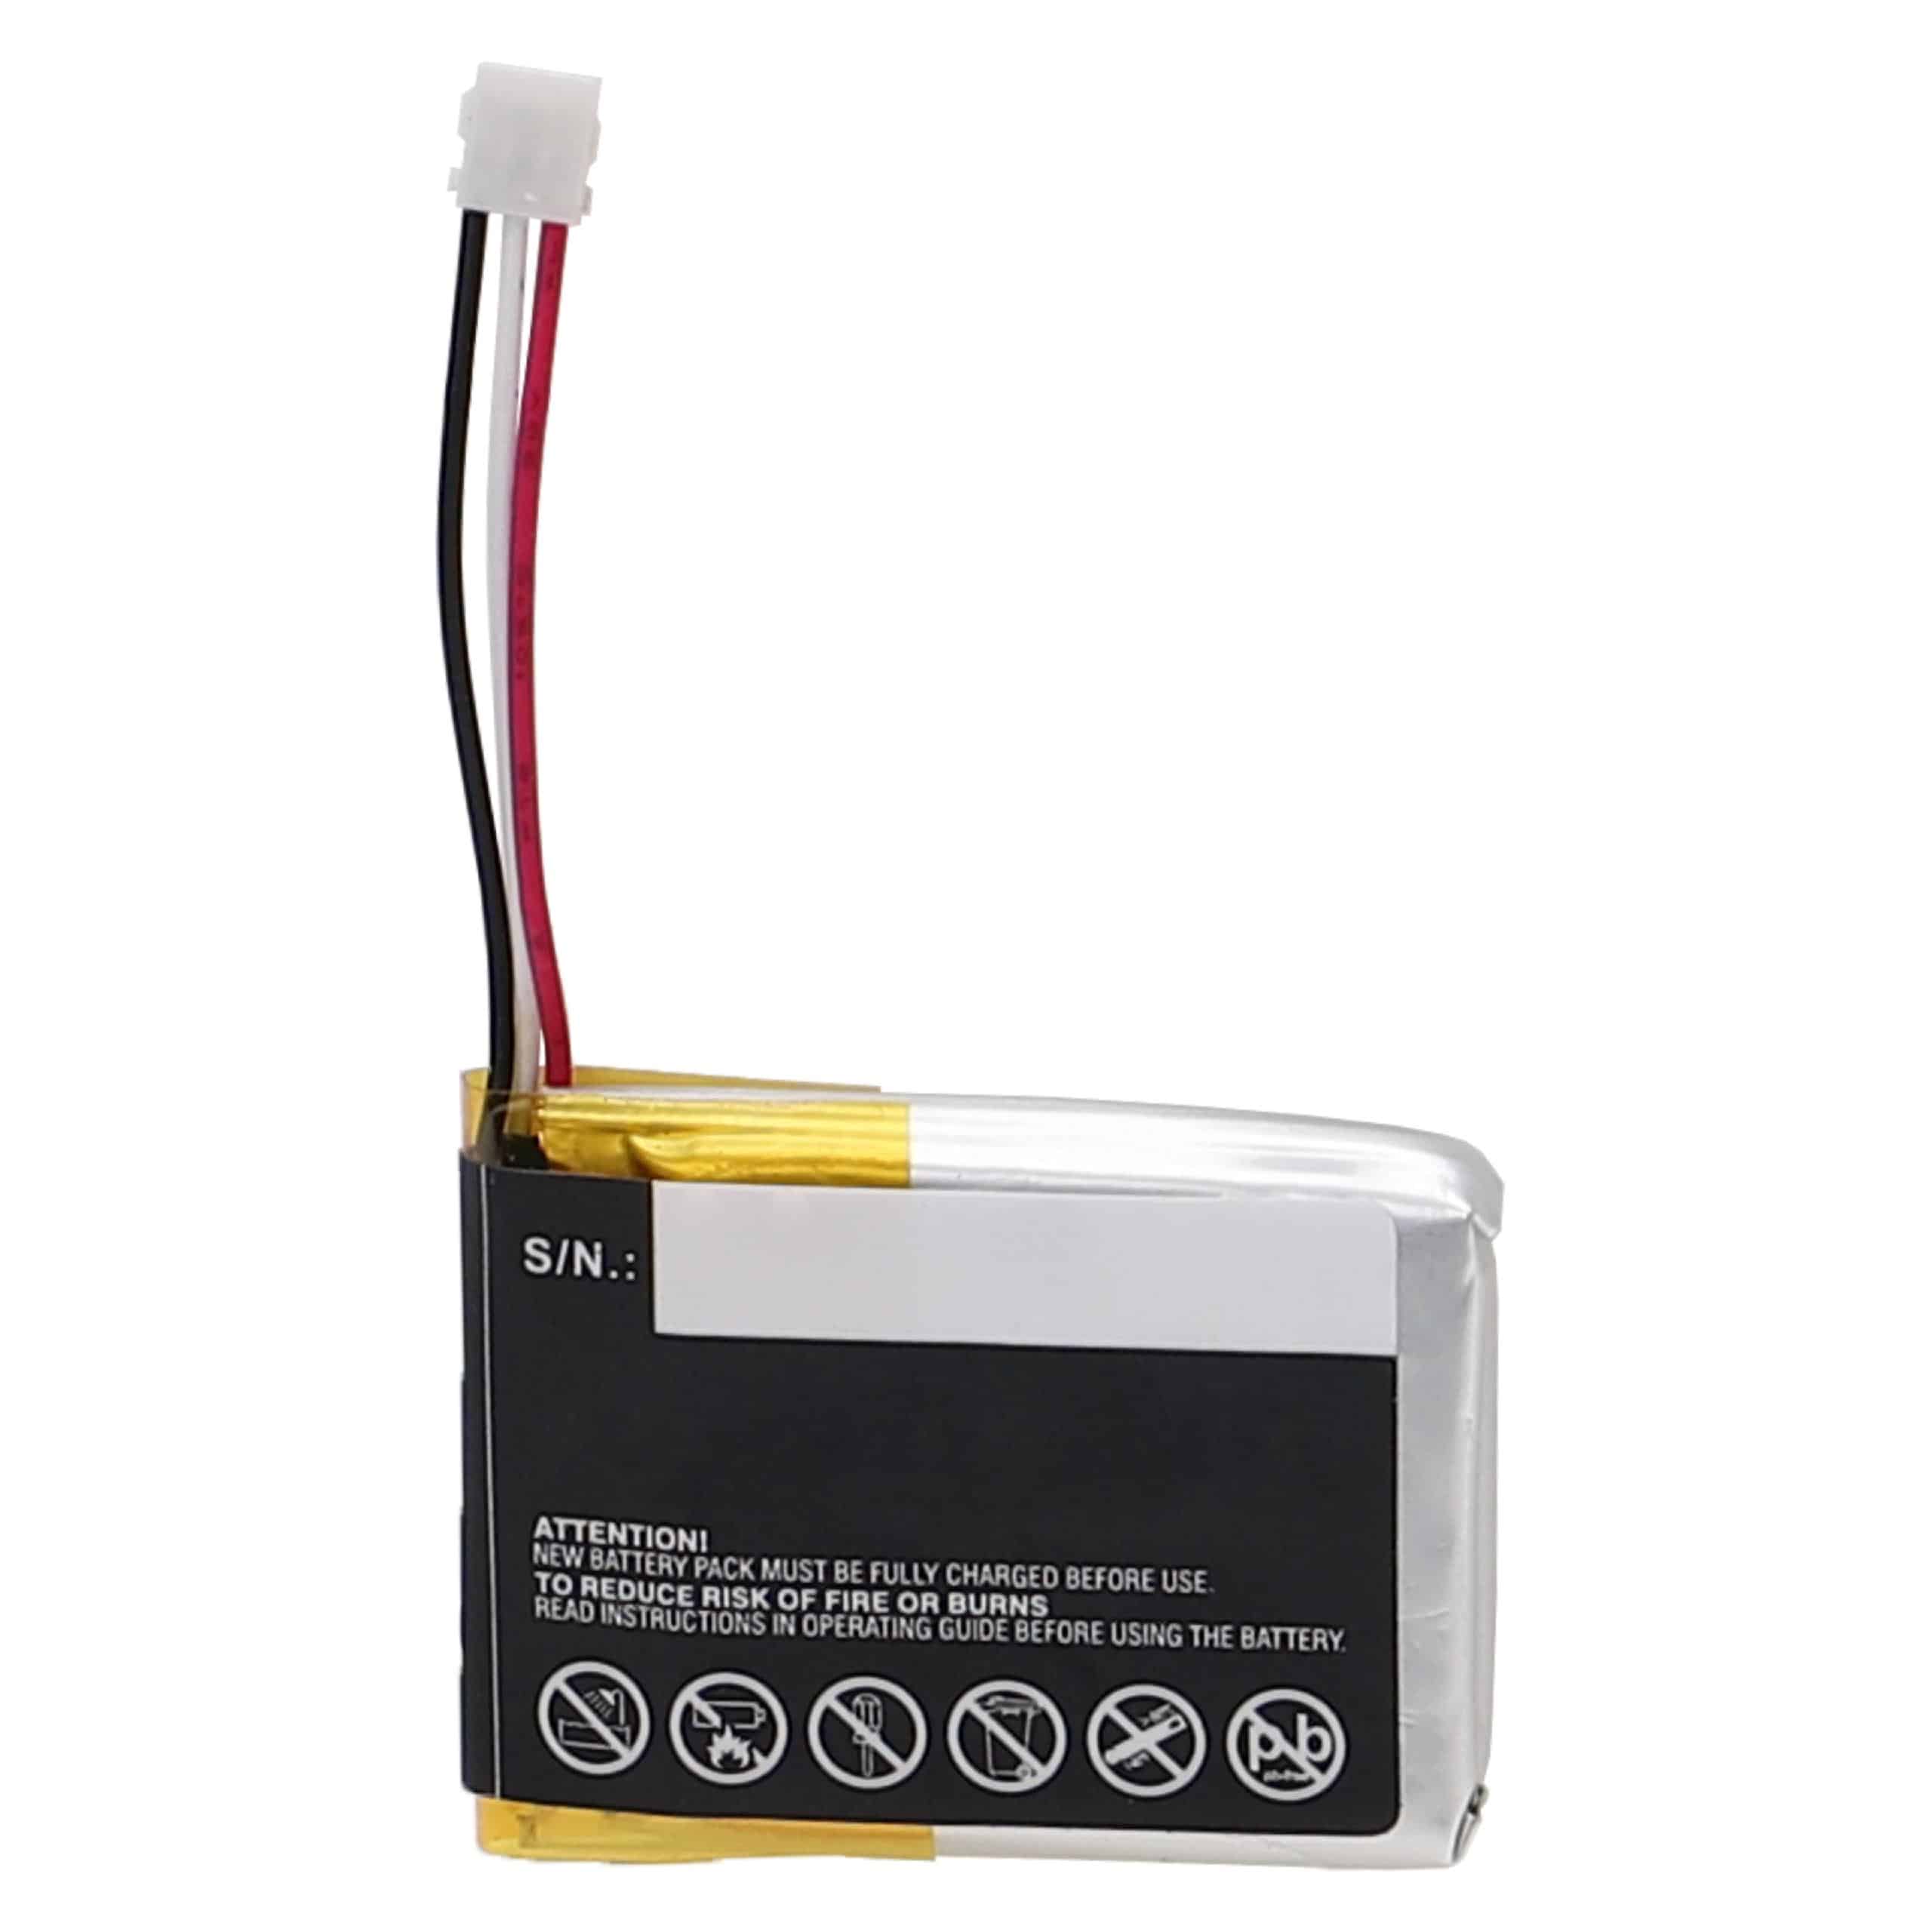 Smartwatch Battery Replacement for Suunto PR-382530 - 240mAh 3.7V Li-polymer